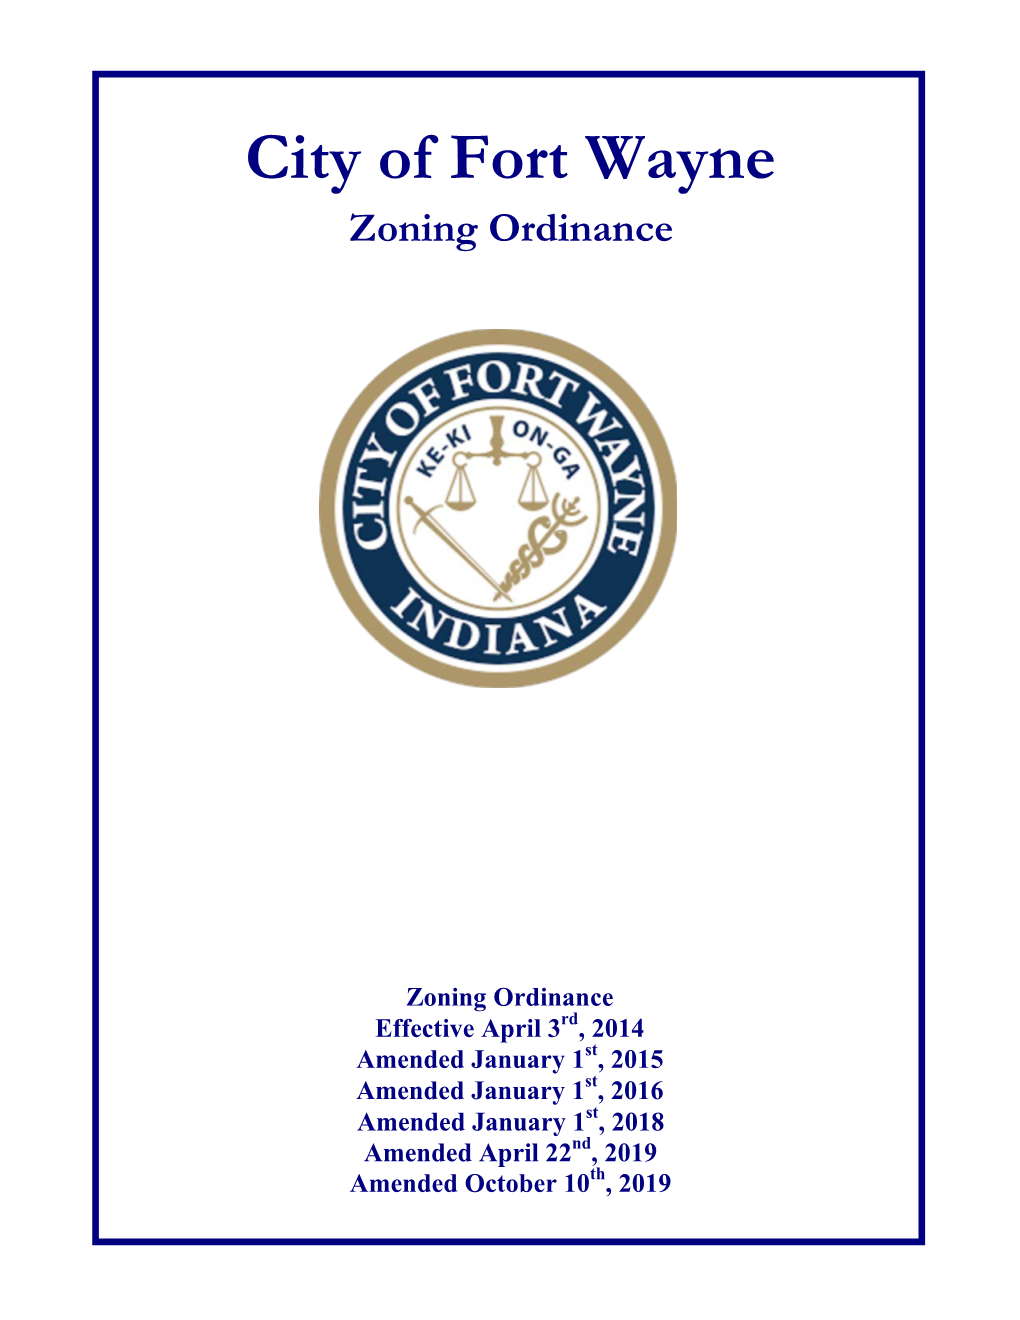 Fort Wayne Zoning Ordinance